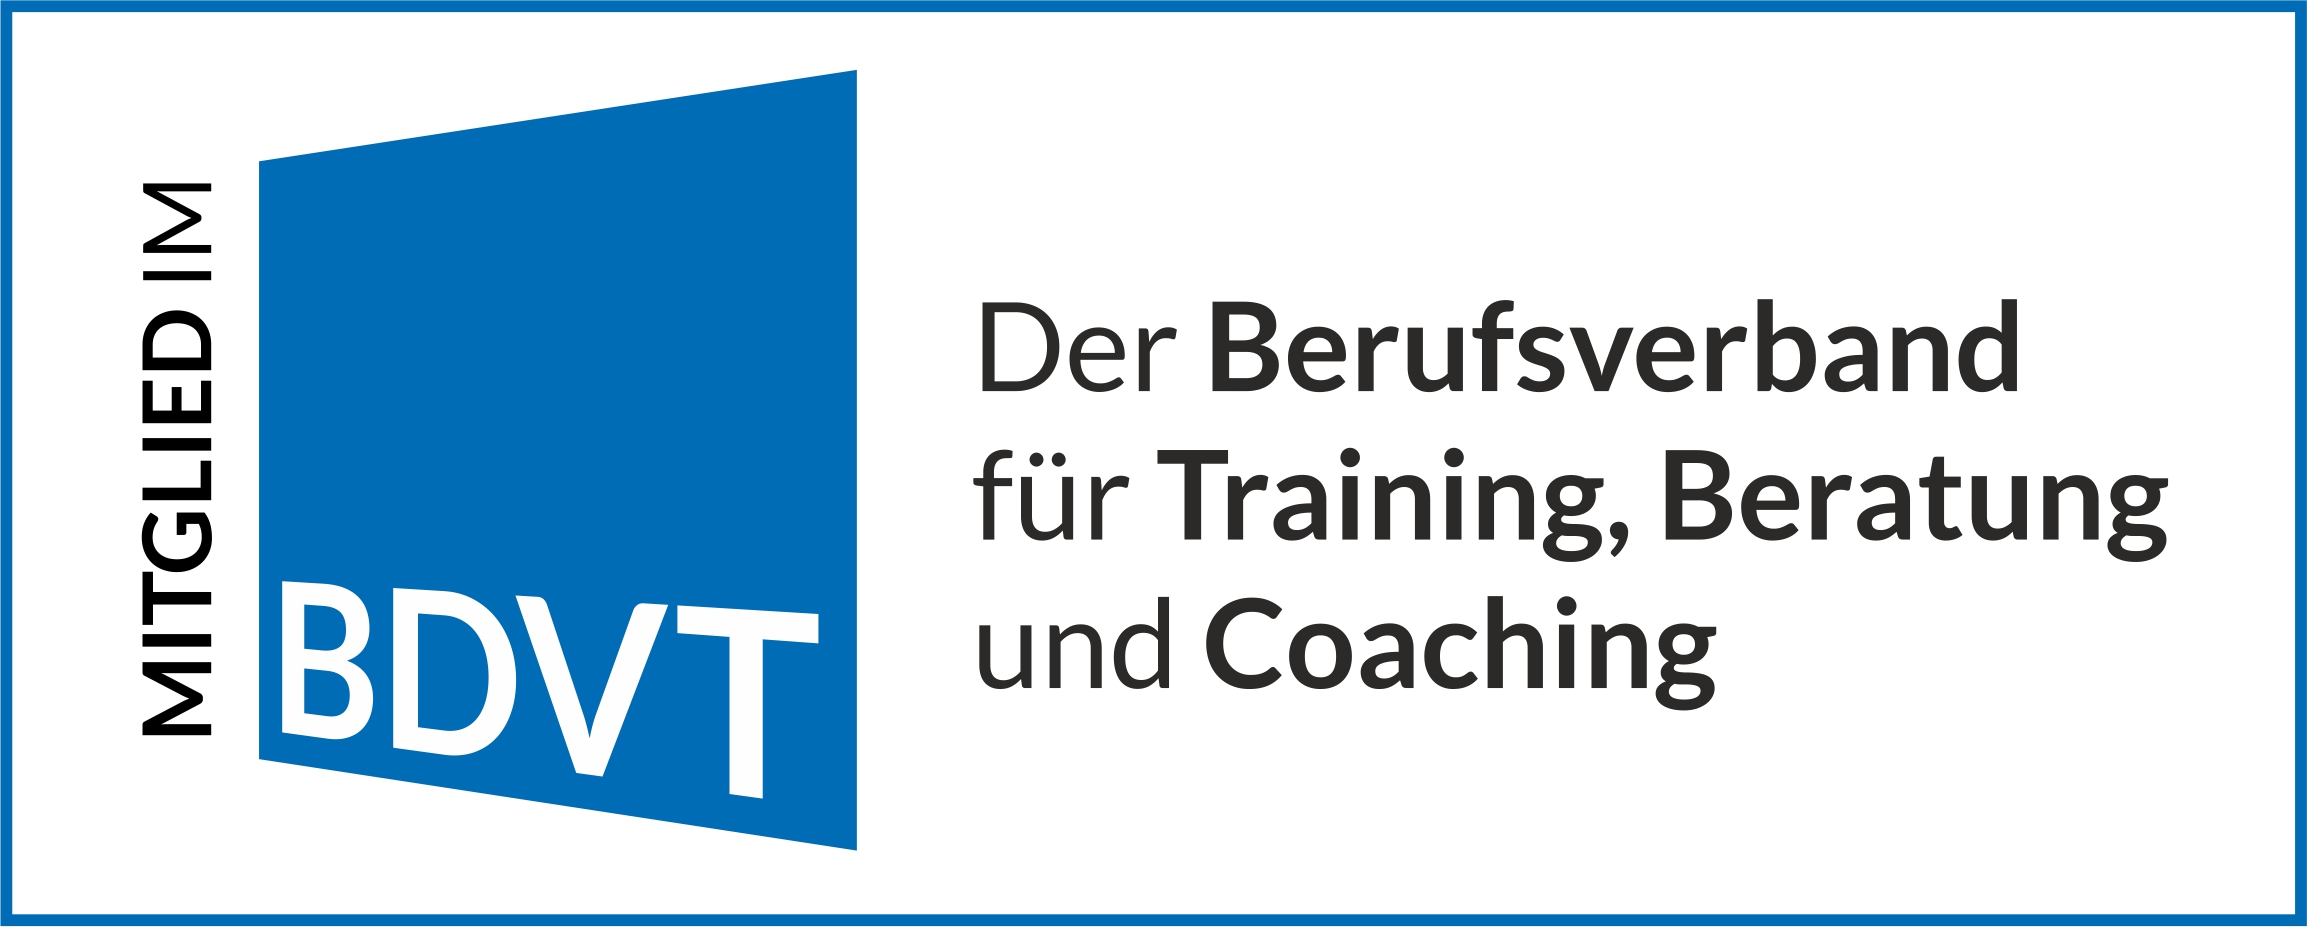 bdvt logo train the trainer frankfurt